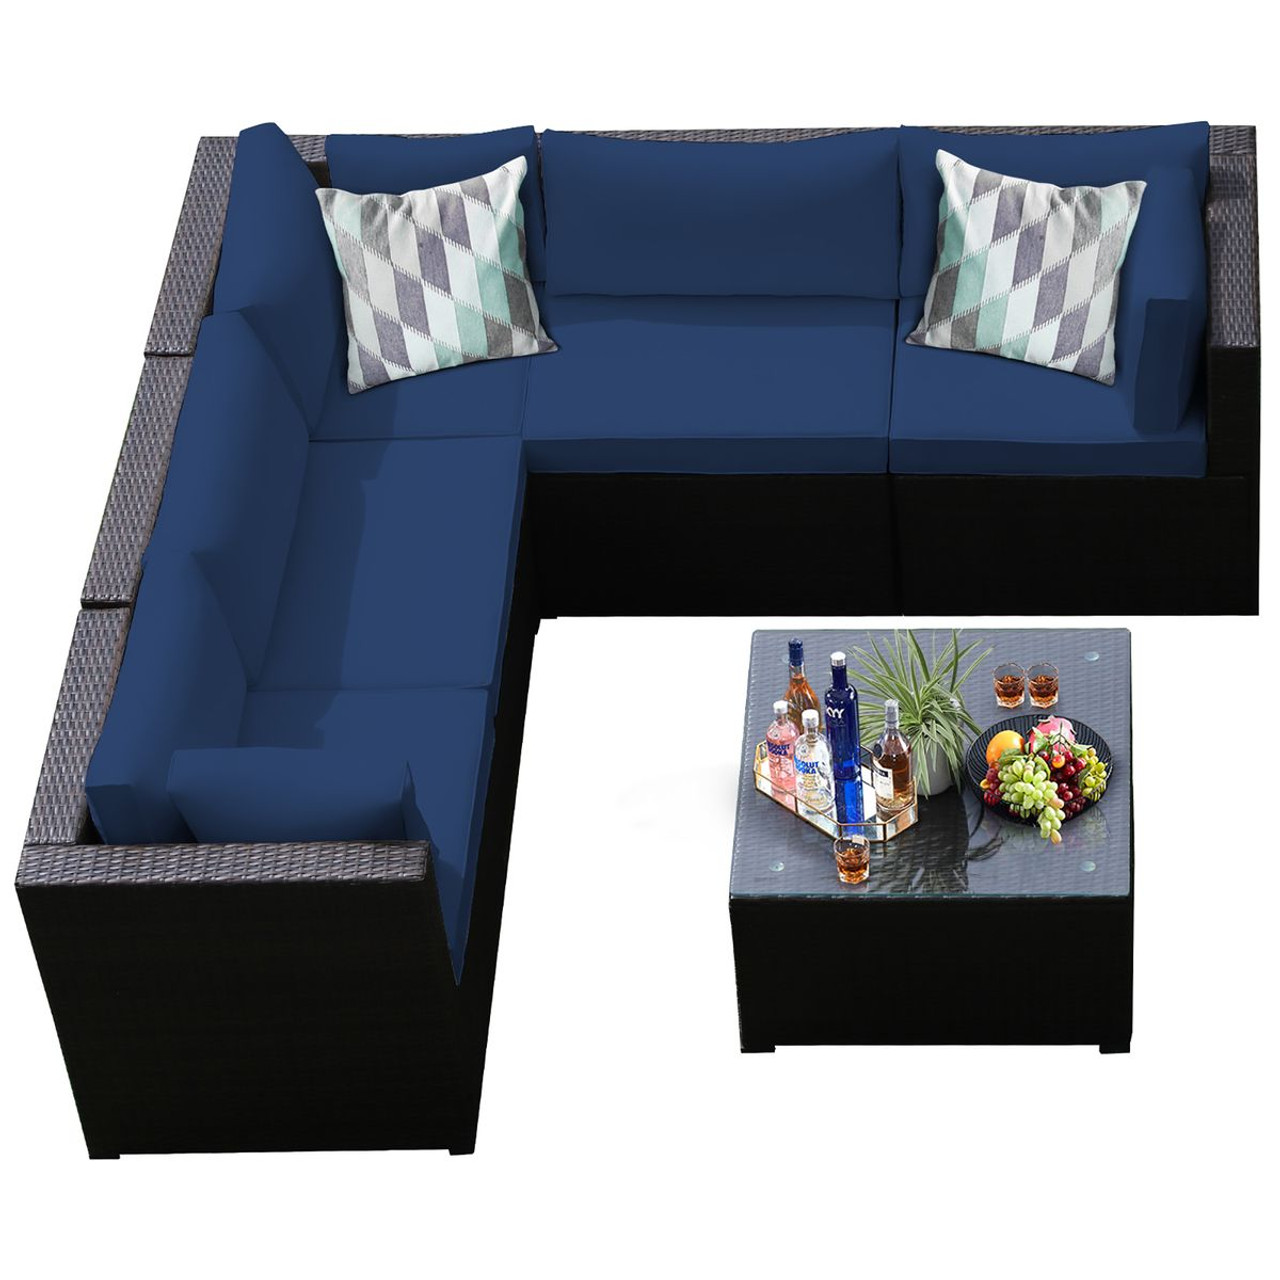 6-Piece Outdoor Patio Rattan Sectional Sofa Set product image